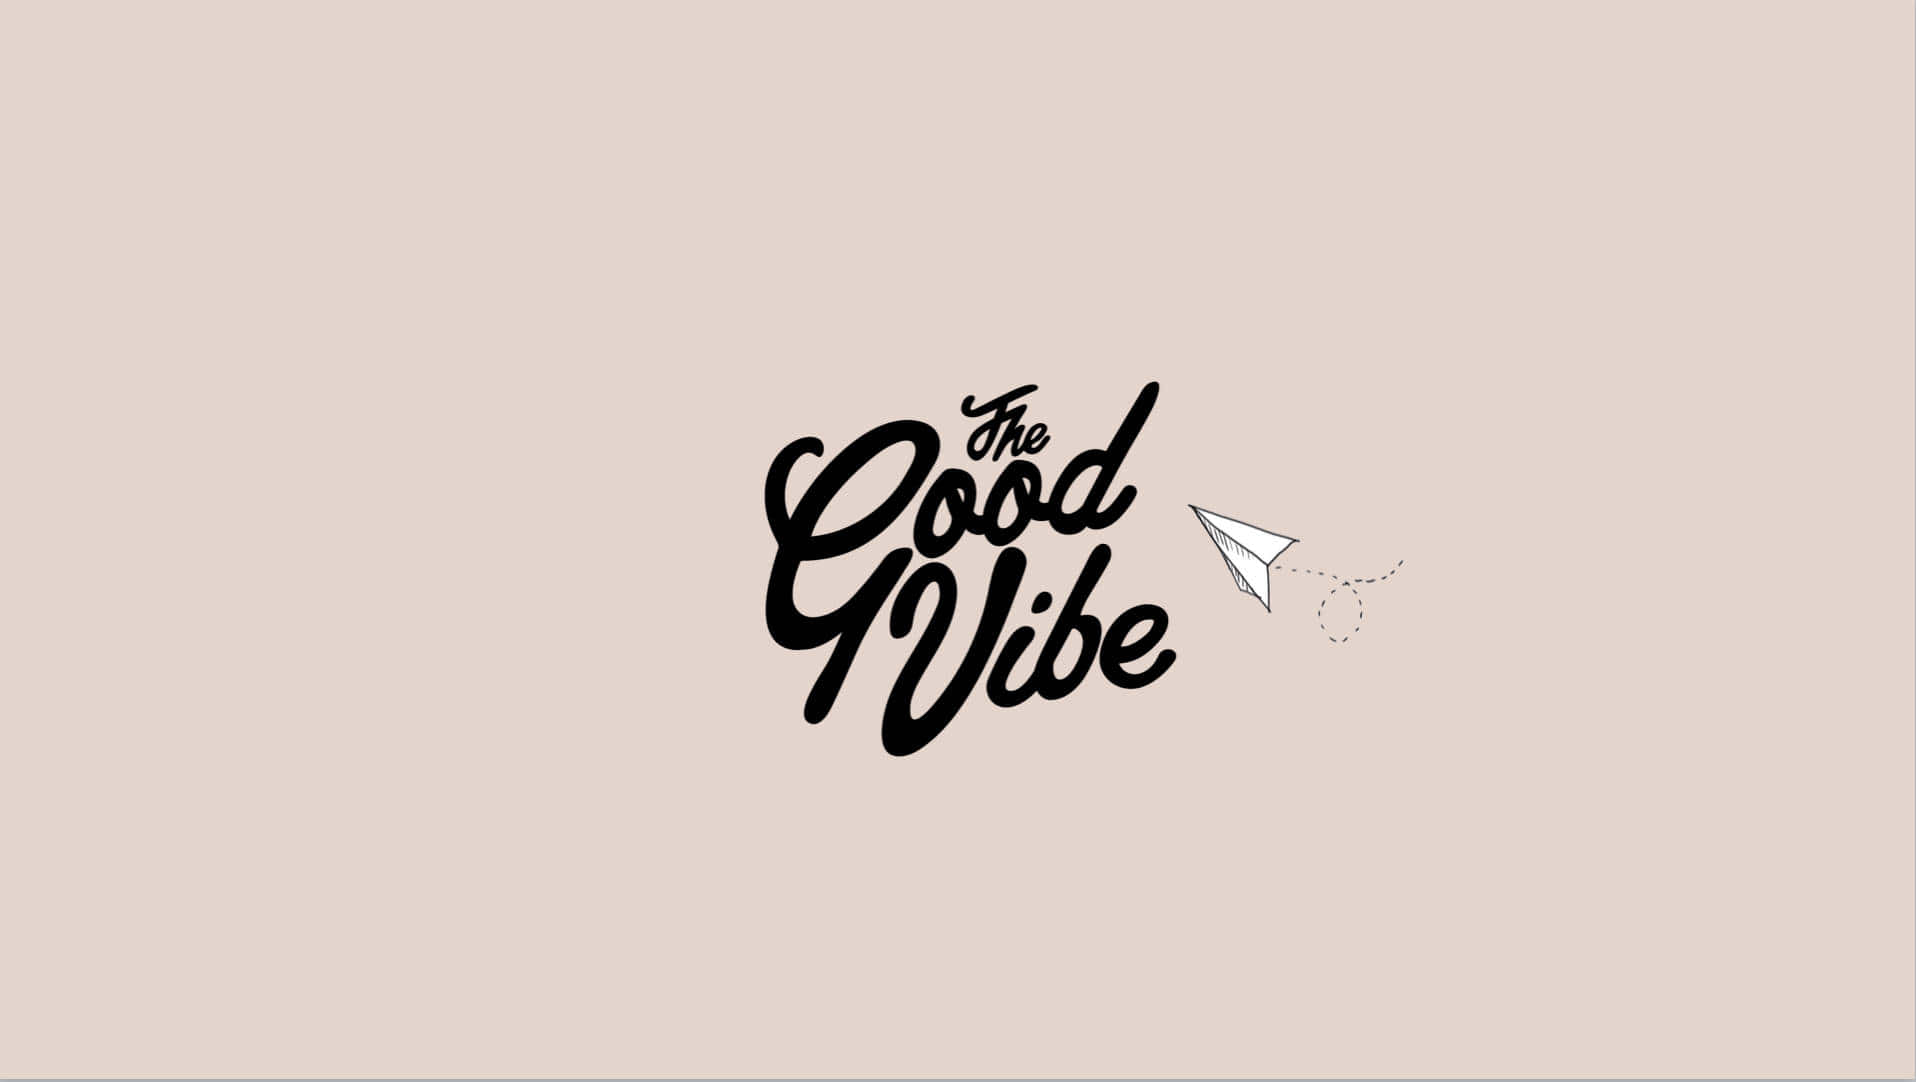 The Good Vibe Logo Wallpaper